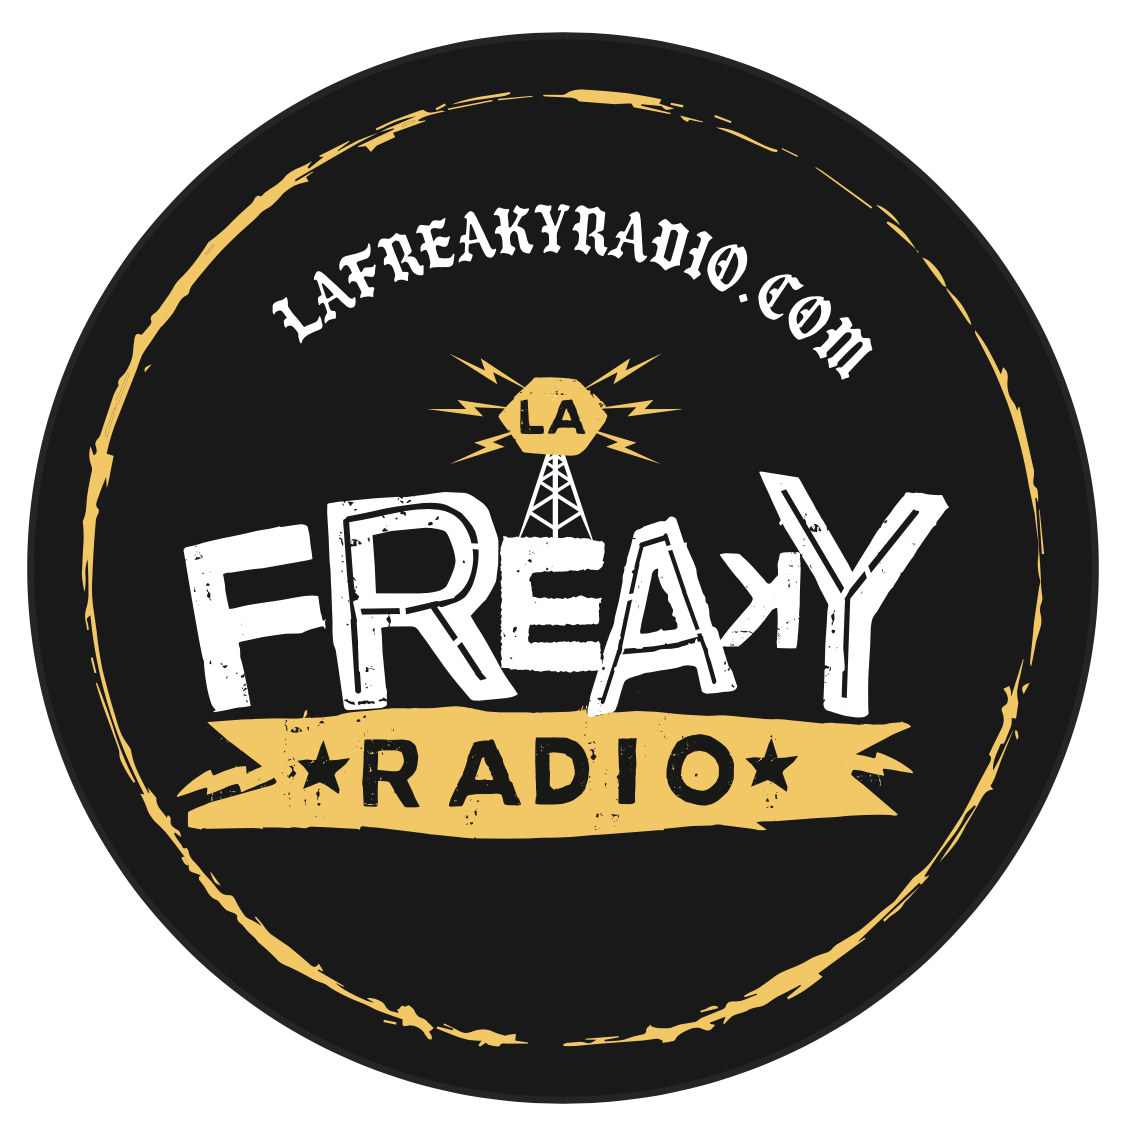 La Freaky Radio